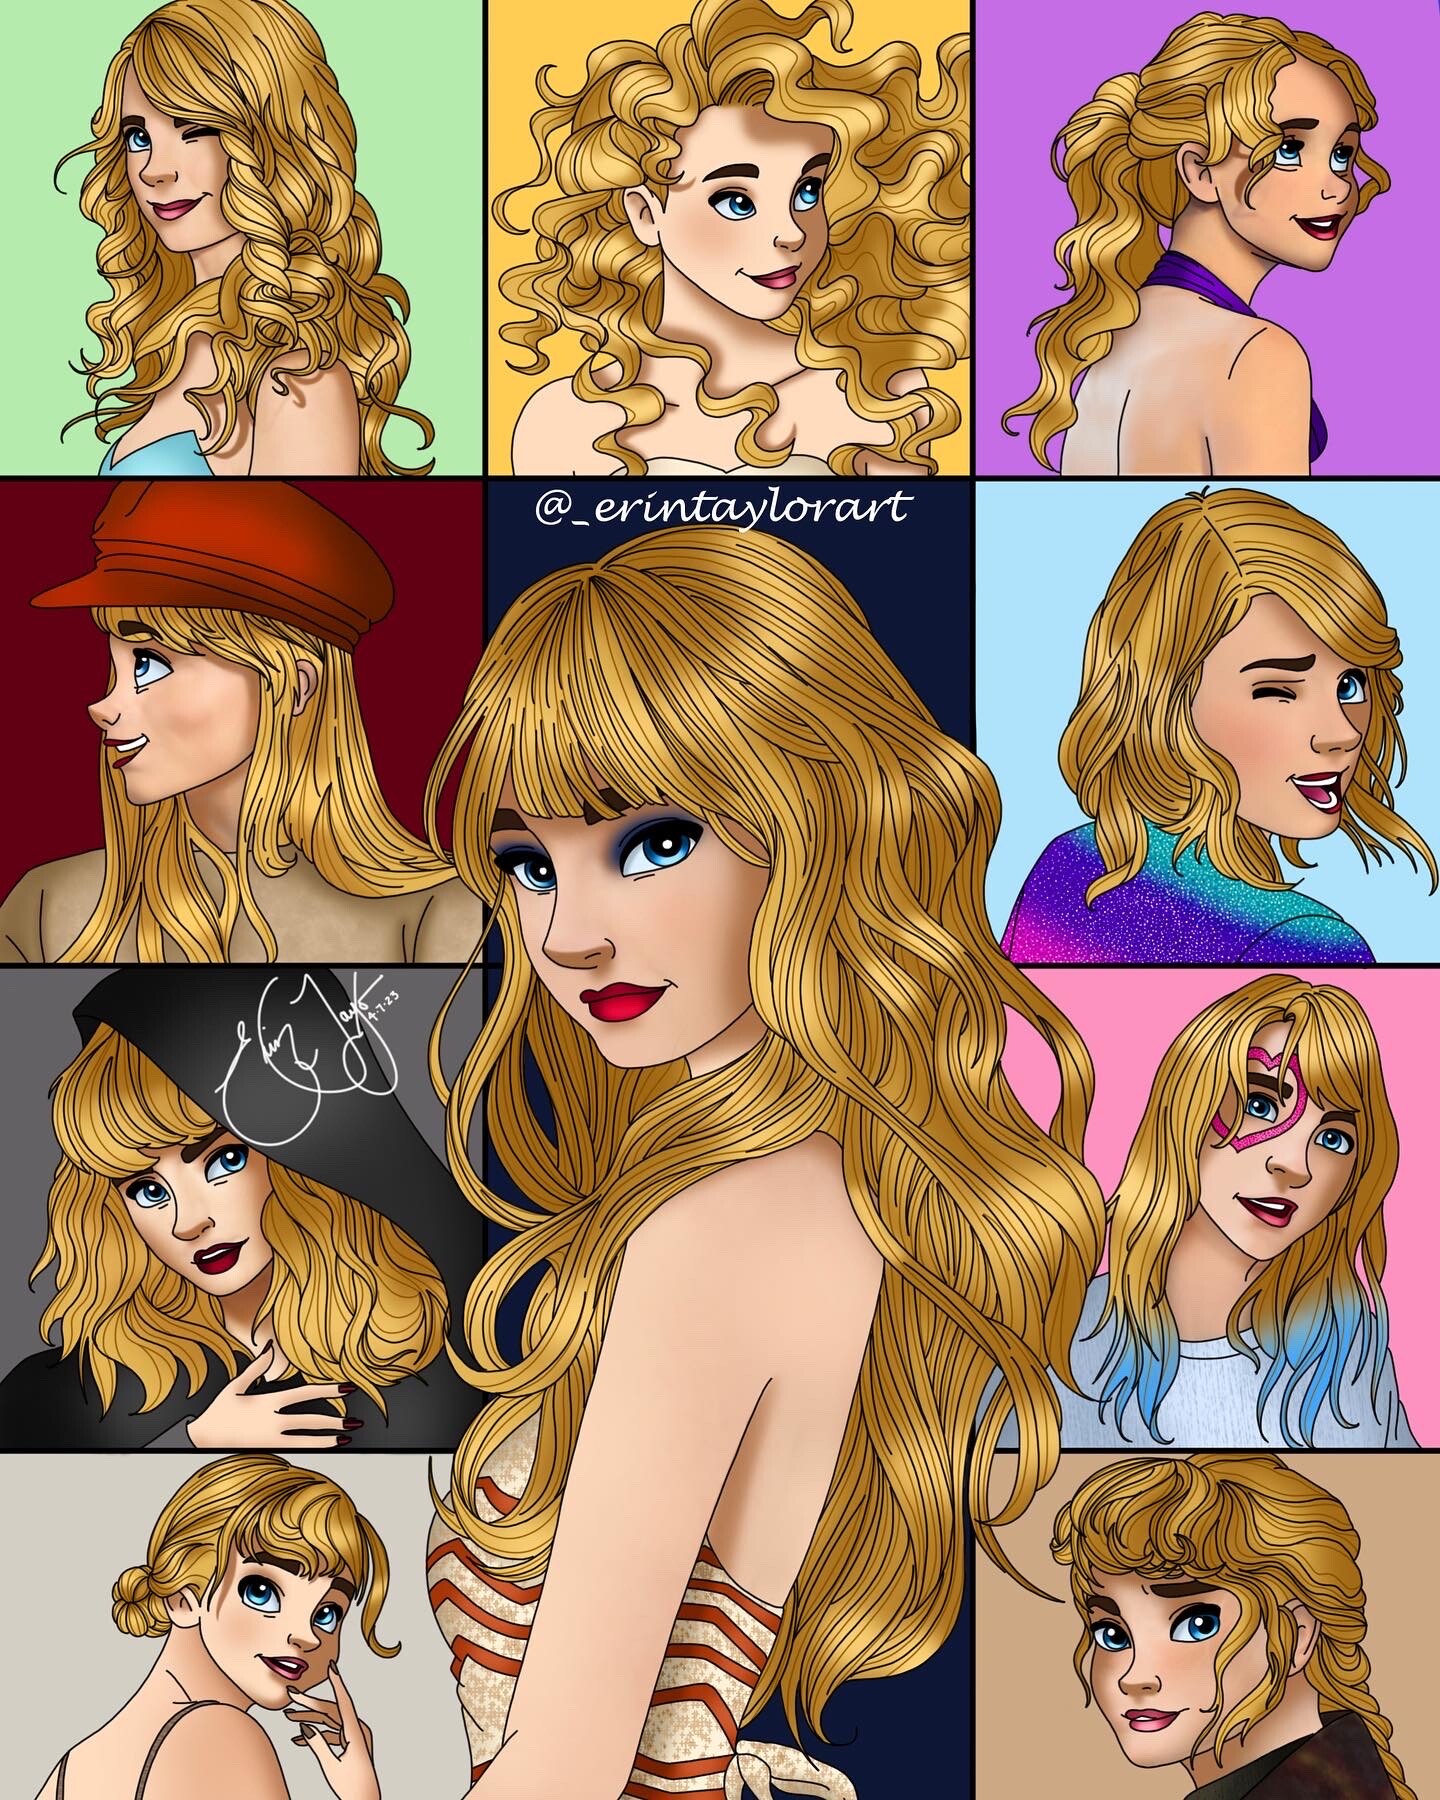 Artstation - Taylor Swift, The Eras Tour✨